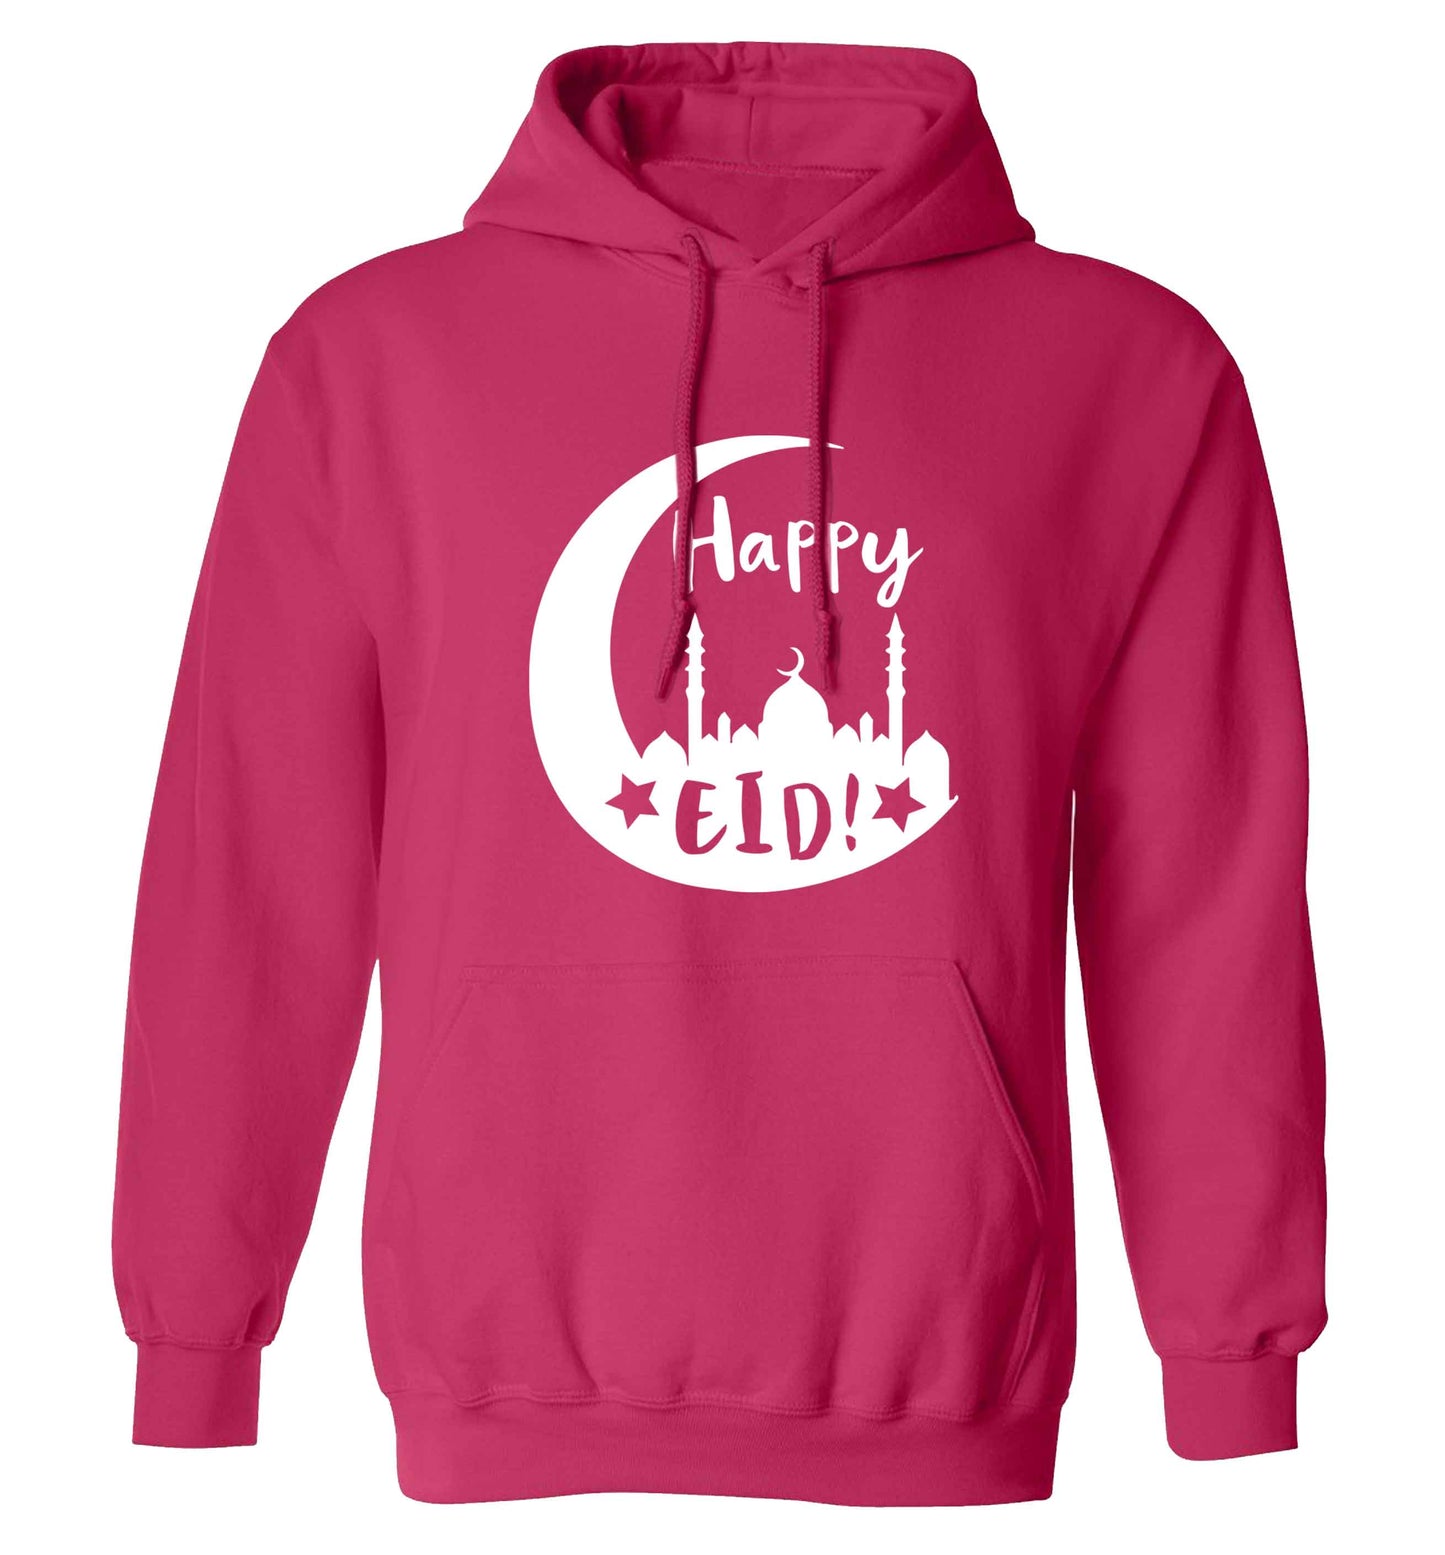 Happy Eid adults unisex pink hoodie 2XL